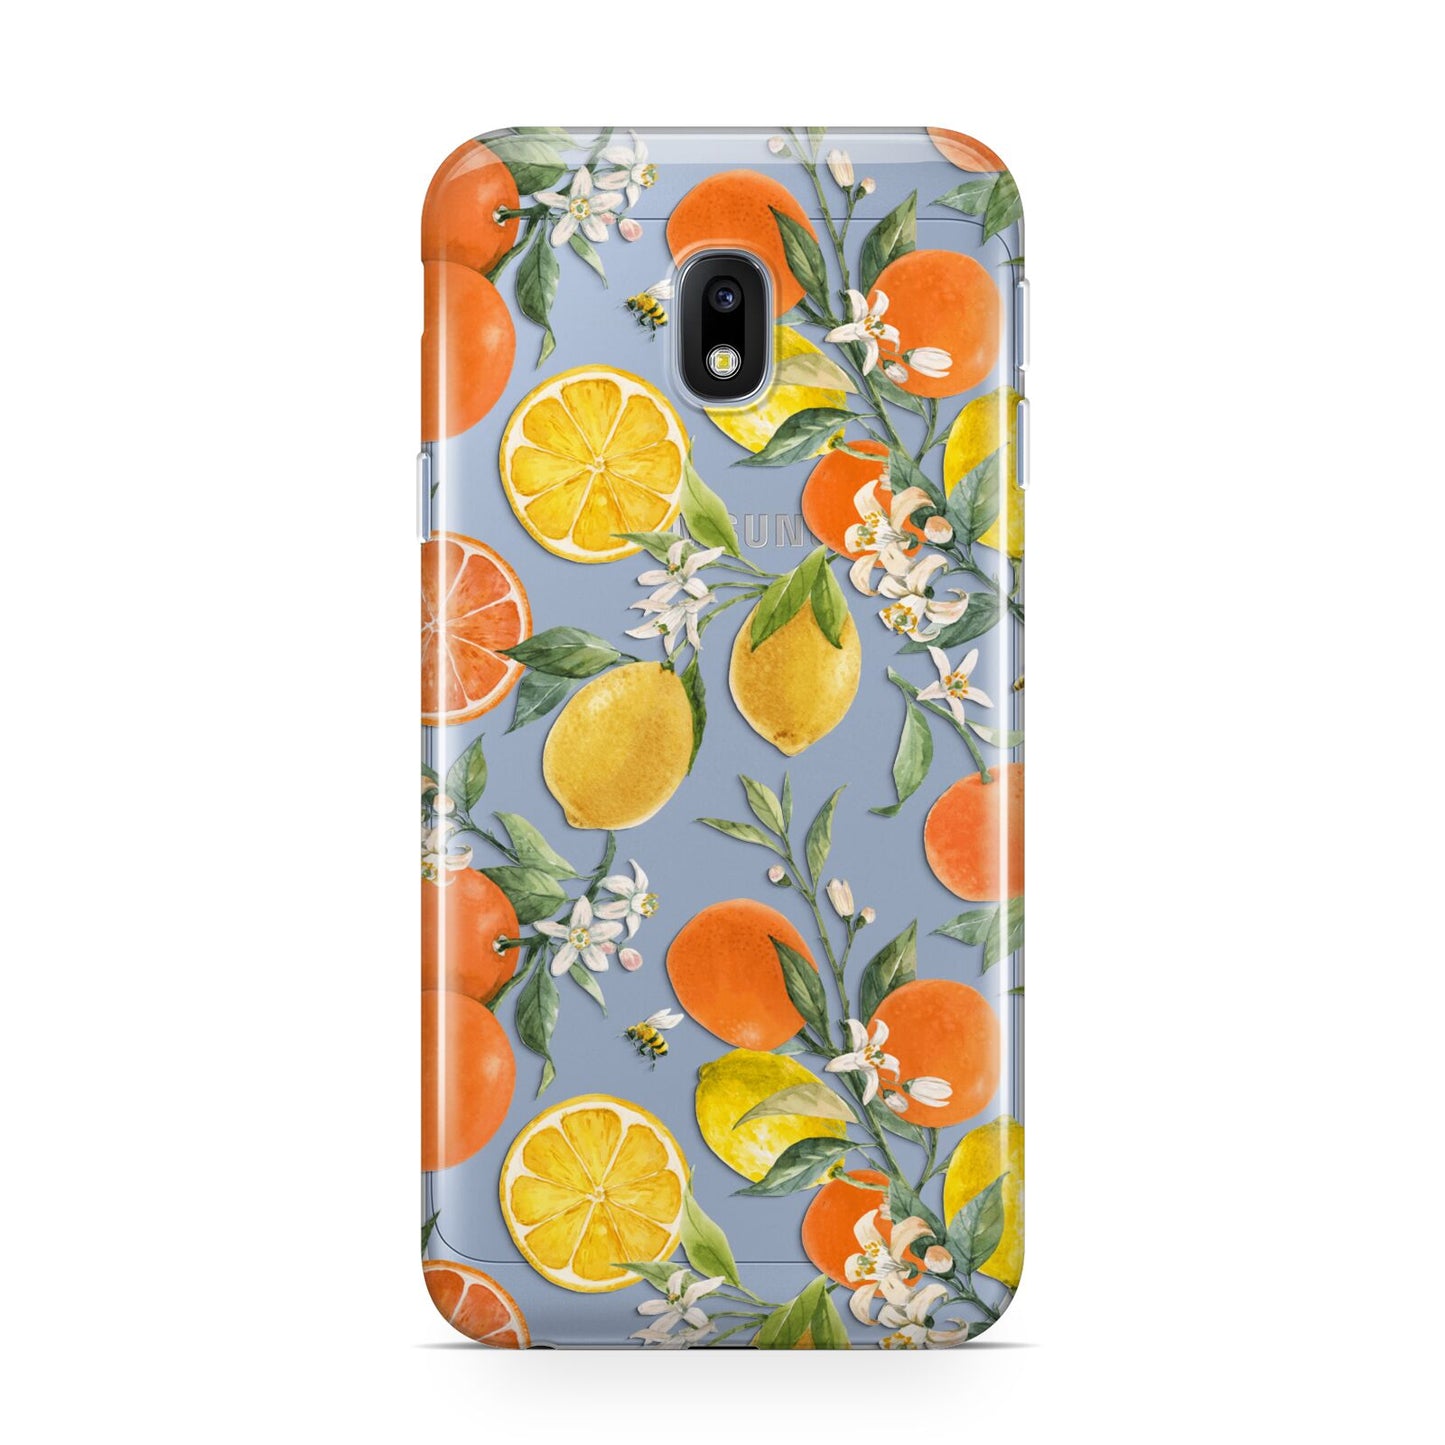 Lemons and Oranges Samsung Galaxy J3 2017 Case